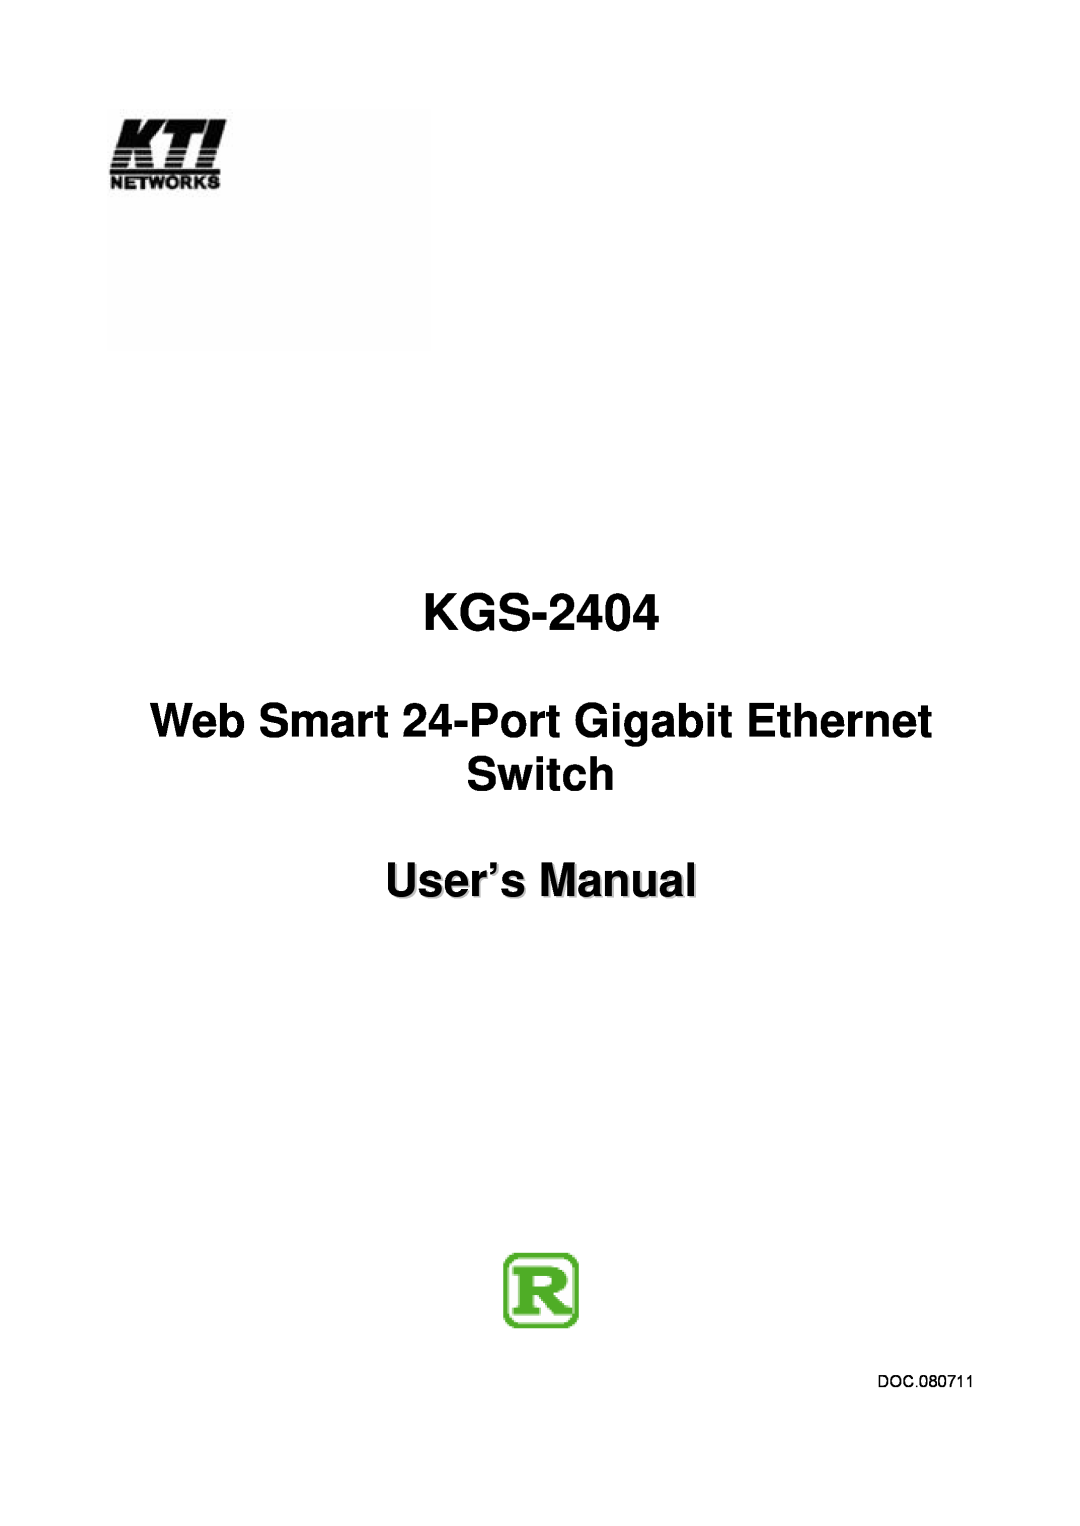 KTI Networks KGS-2404 manual Web Smart 24-Port Gigabit Ethernet Switch User’s Manual, DOC.080711 